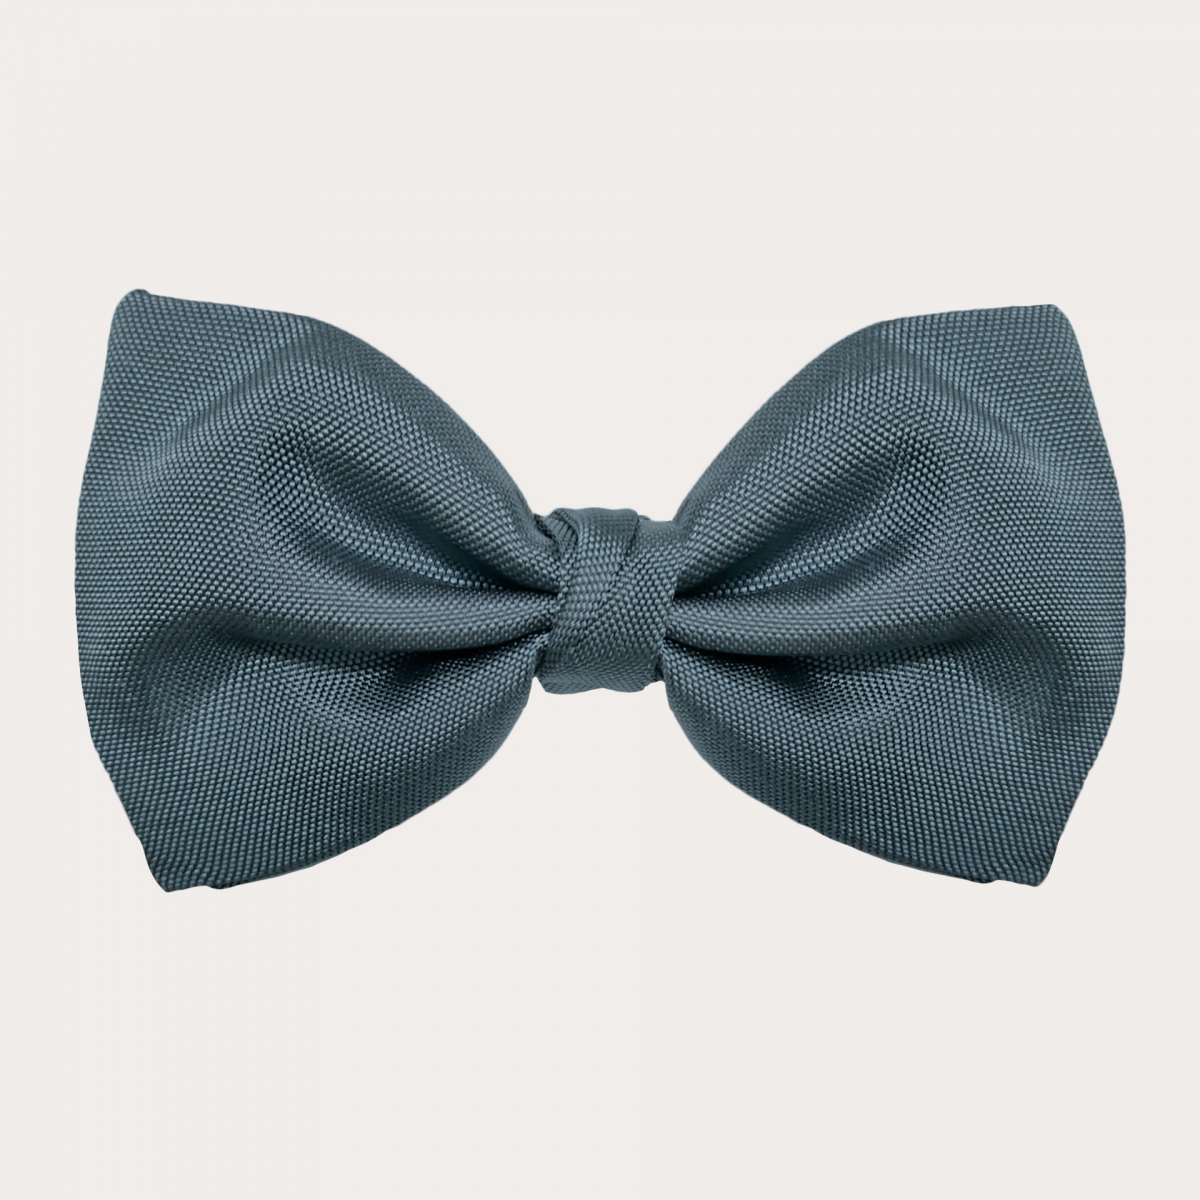 BRUCLE Silk pre-tied bow tie in dusty blue jacquard silk